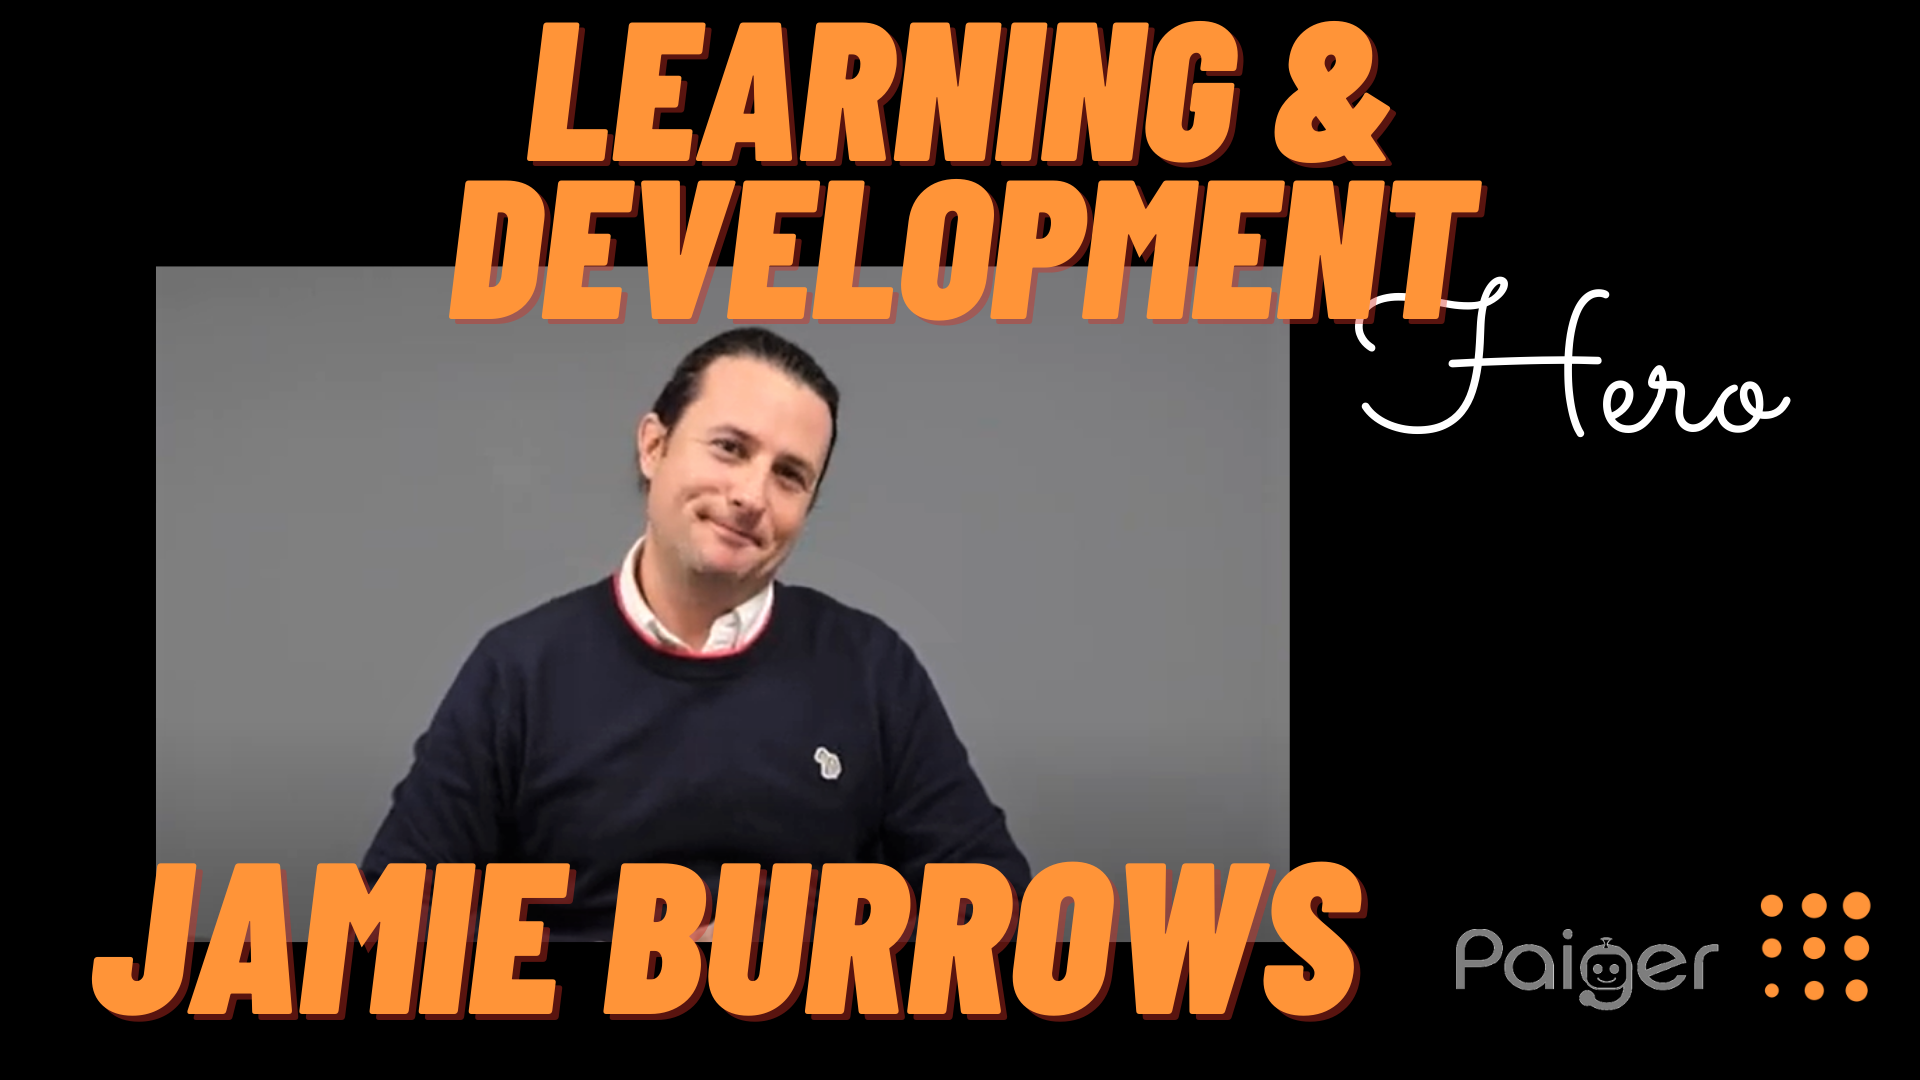 Jamie Burrows, Learning & Development Hero 2023!